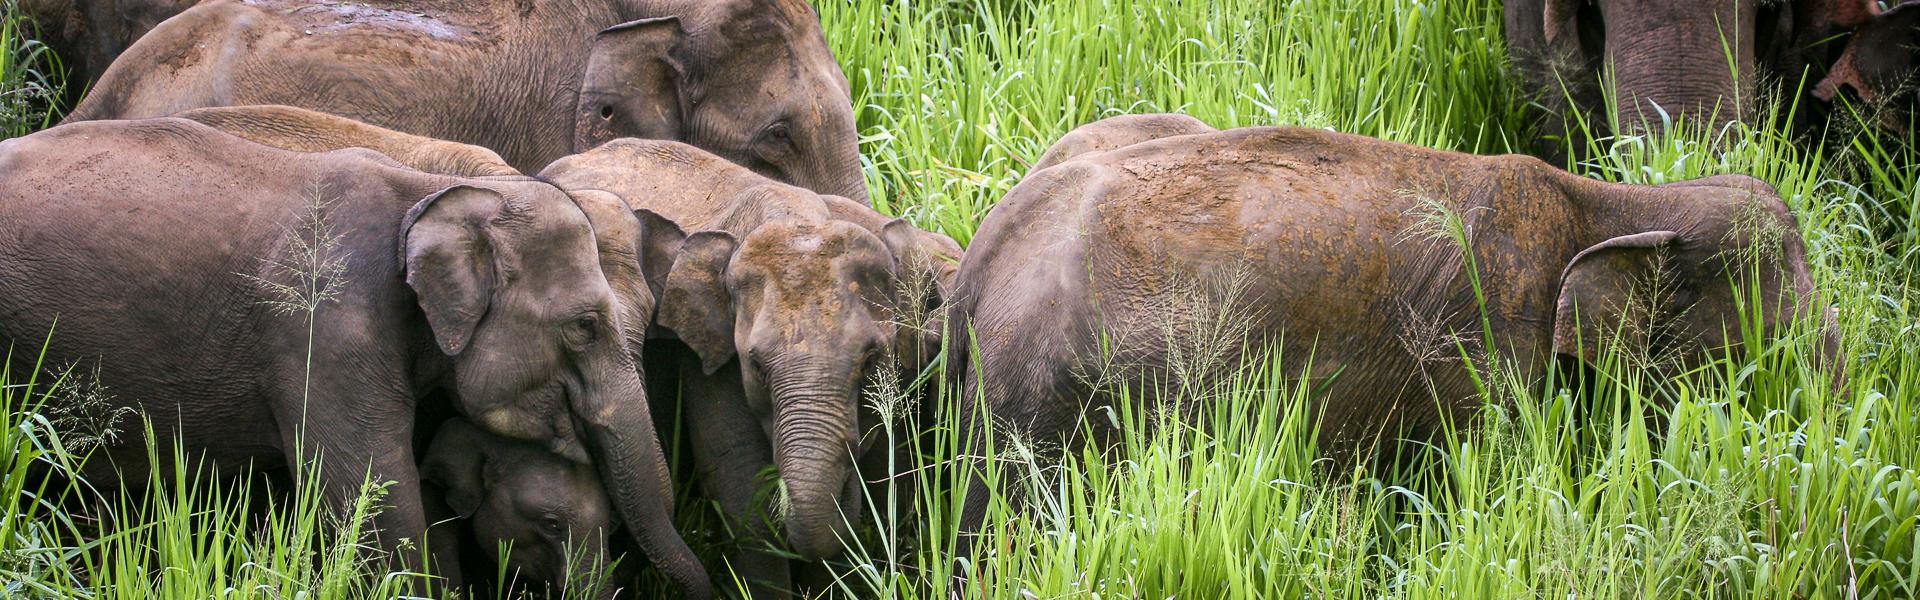 Elefantenherden ziehen durch die Landschaft |  NKAR Travels & Tours / Chamleon